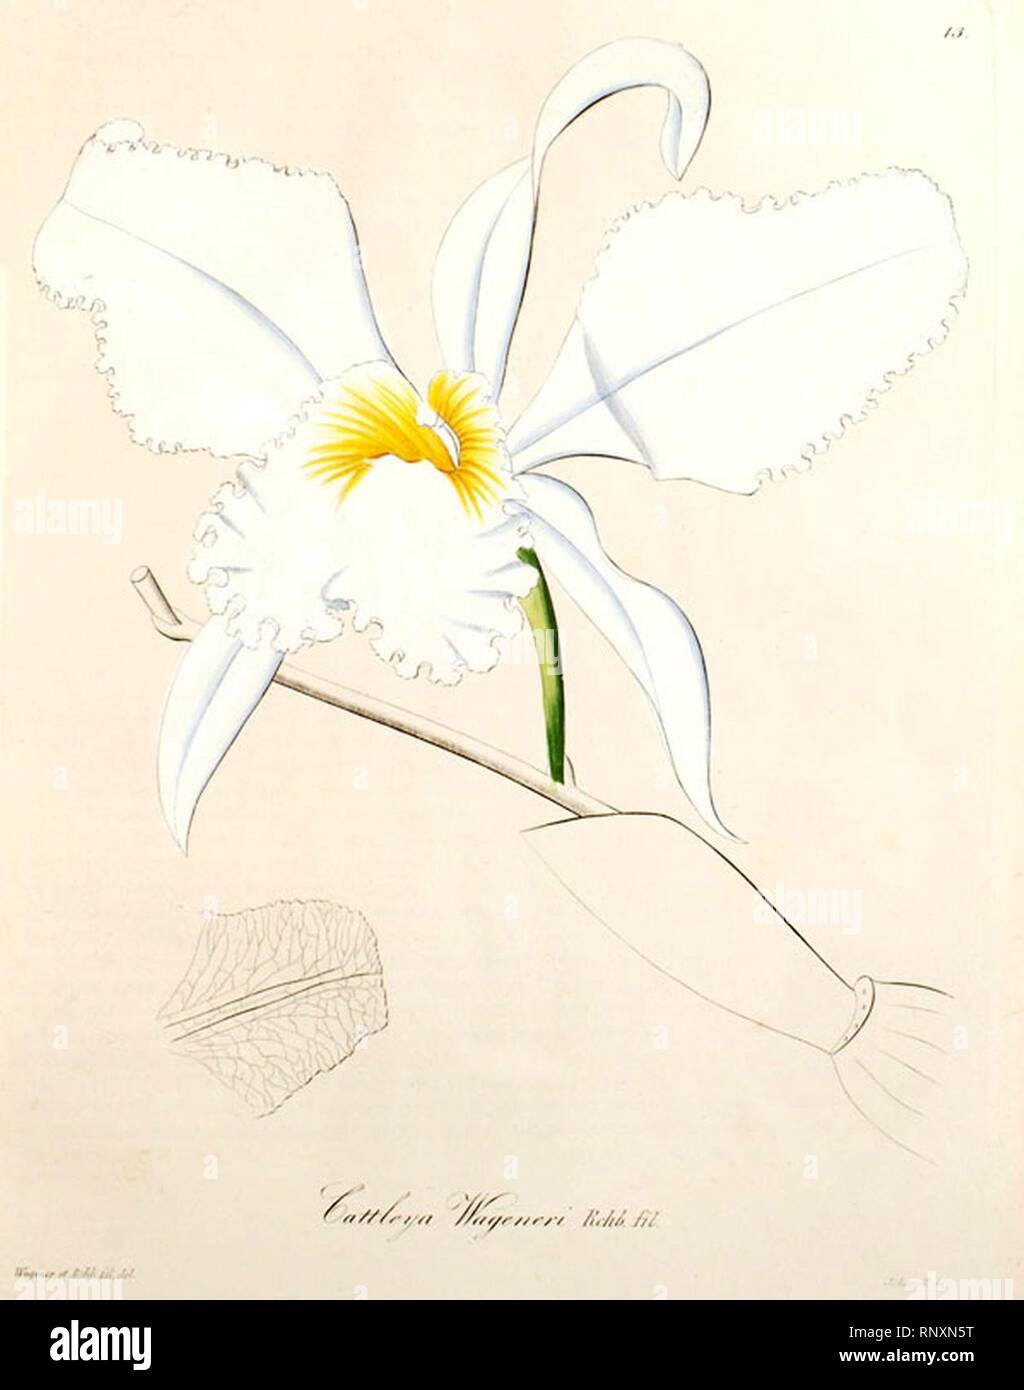 Cattleya mossiae (as Cattleya wageneri) - Xenia 1 pl. 13 (1858). Stock Photo